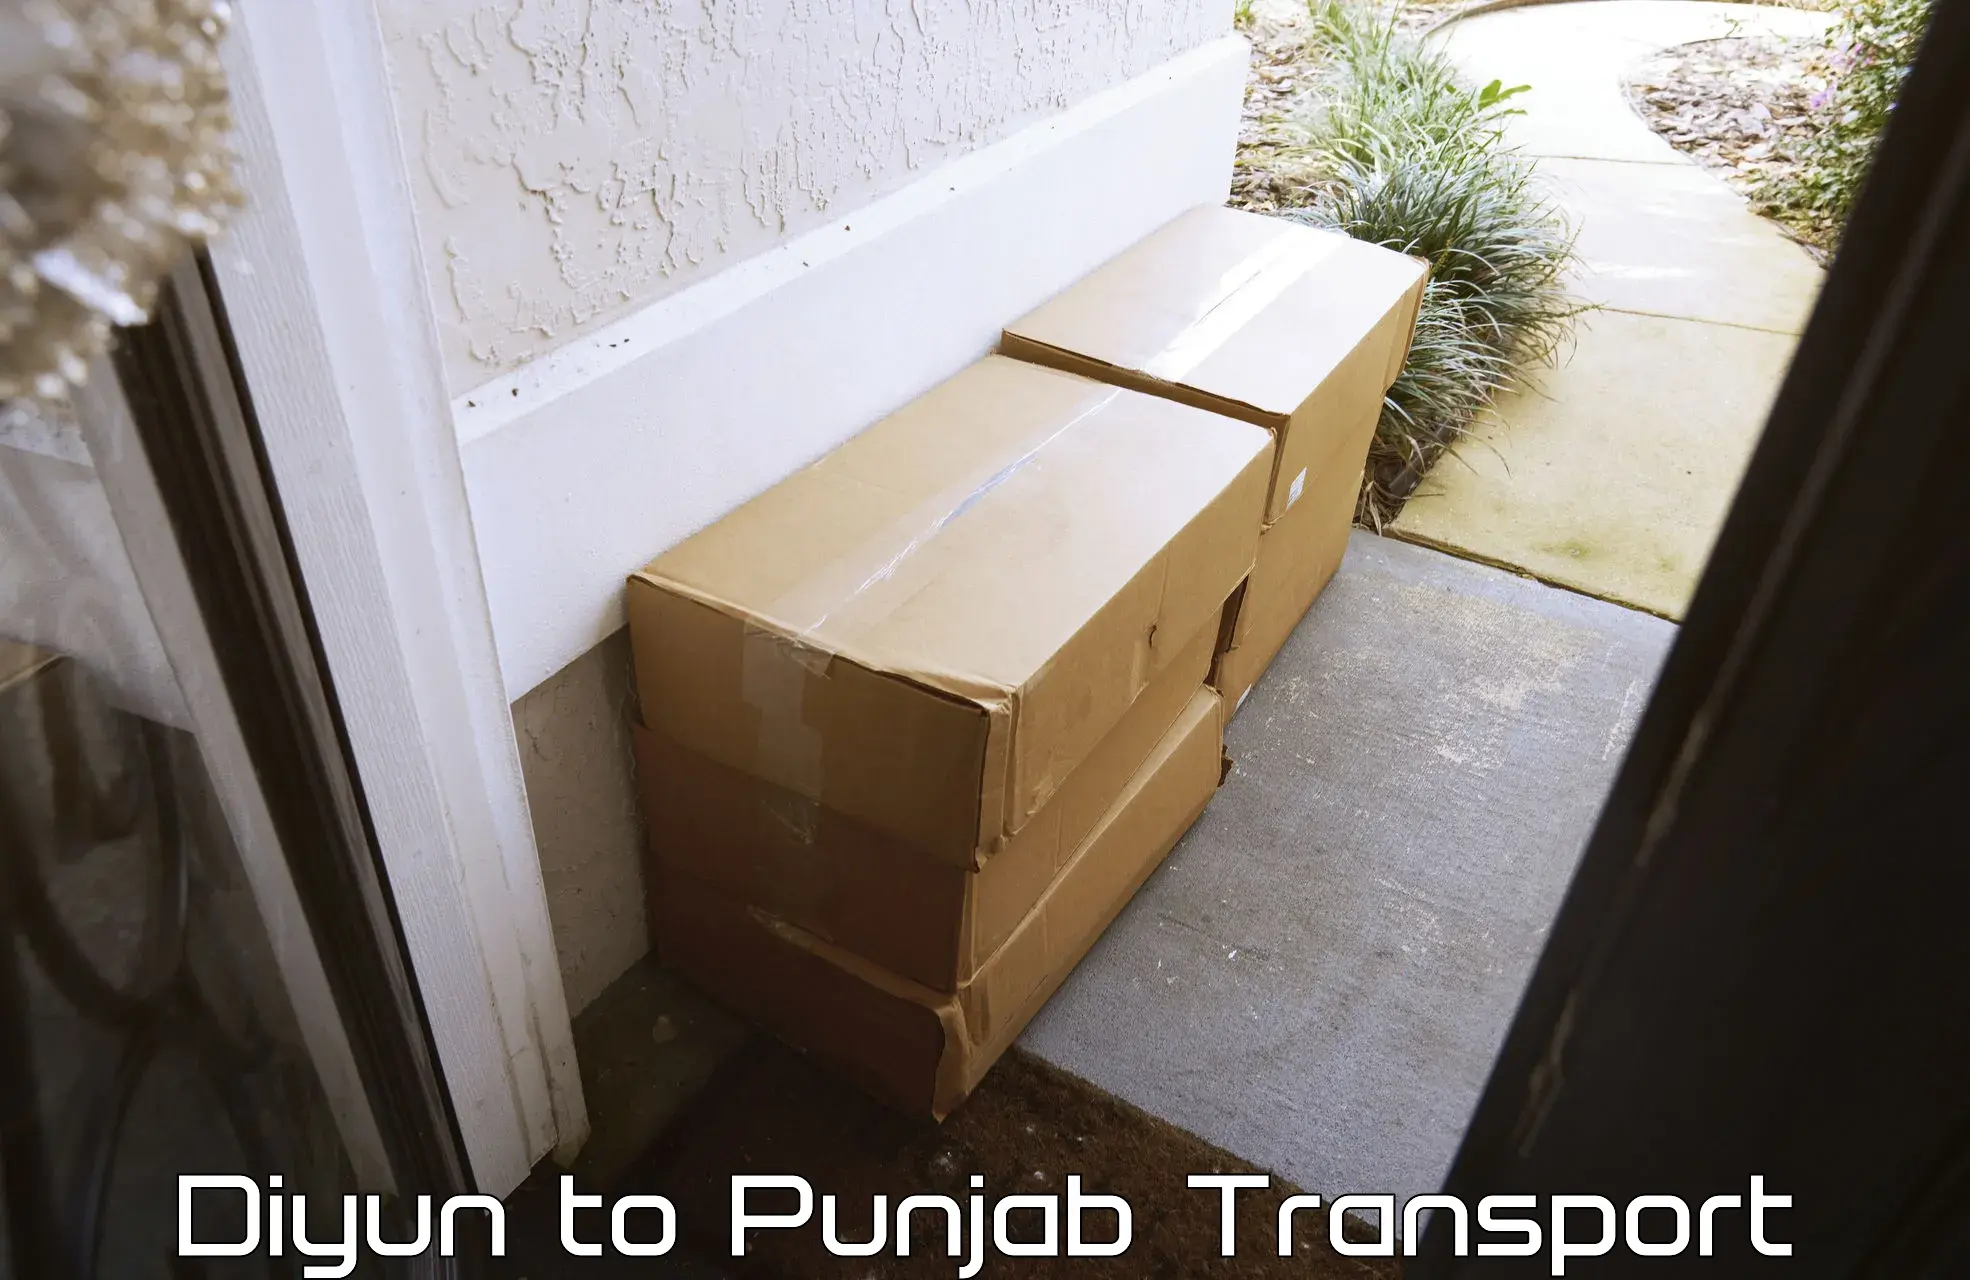 Furniture transport service Diyun to Punjab